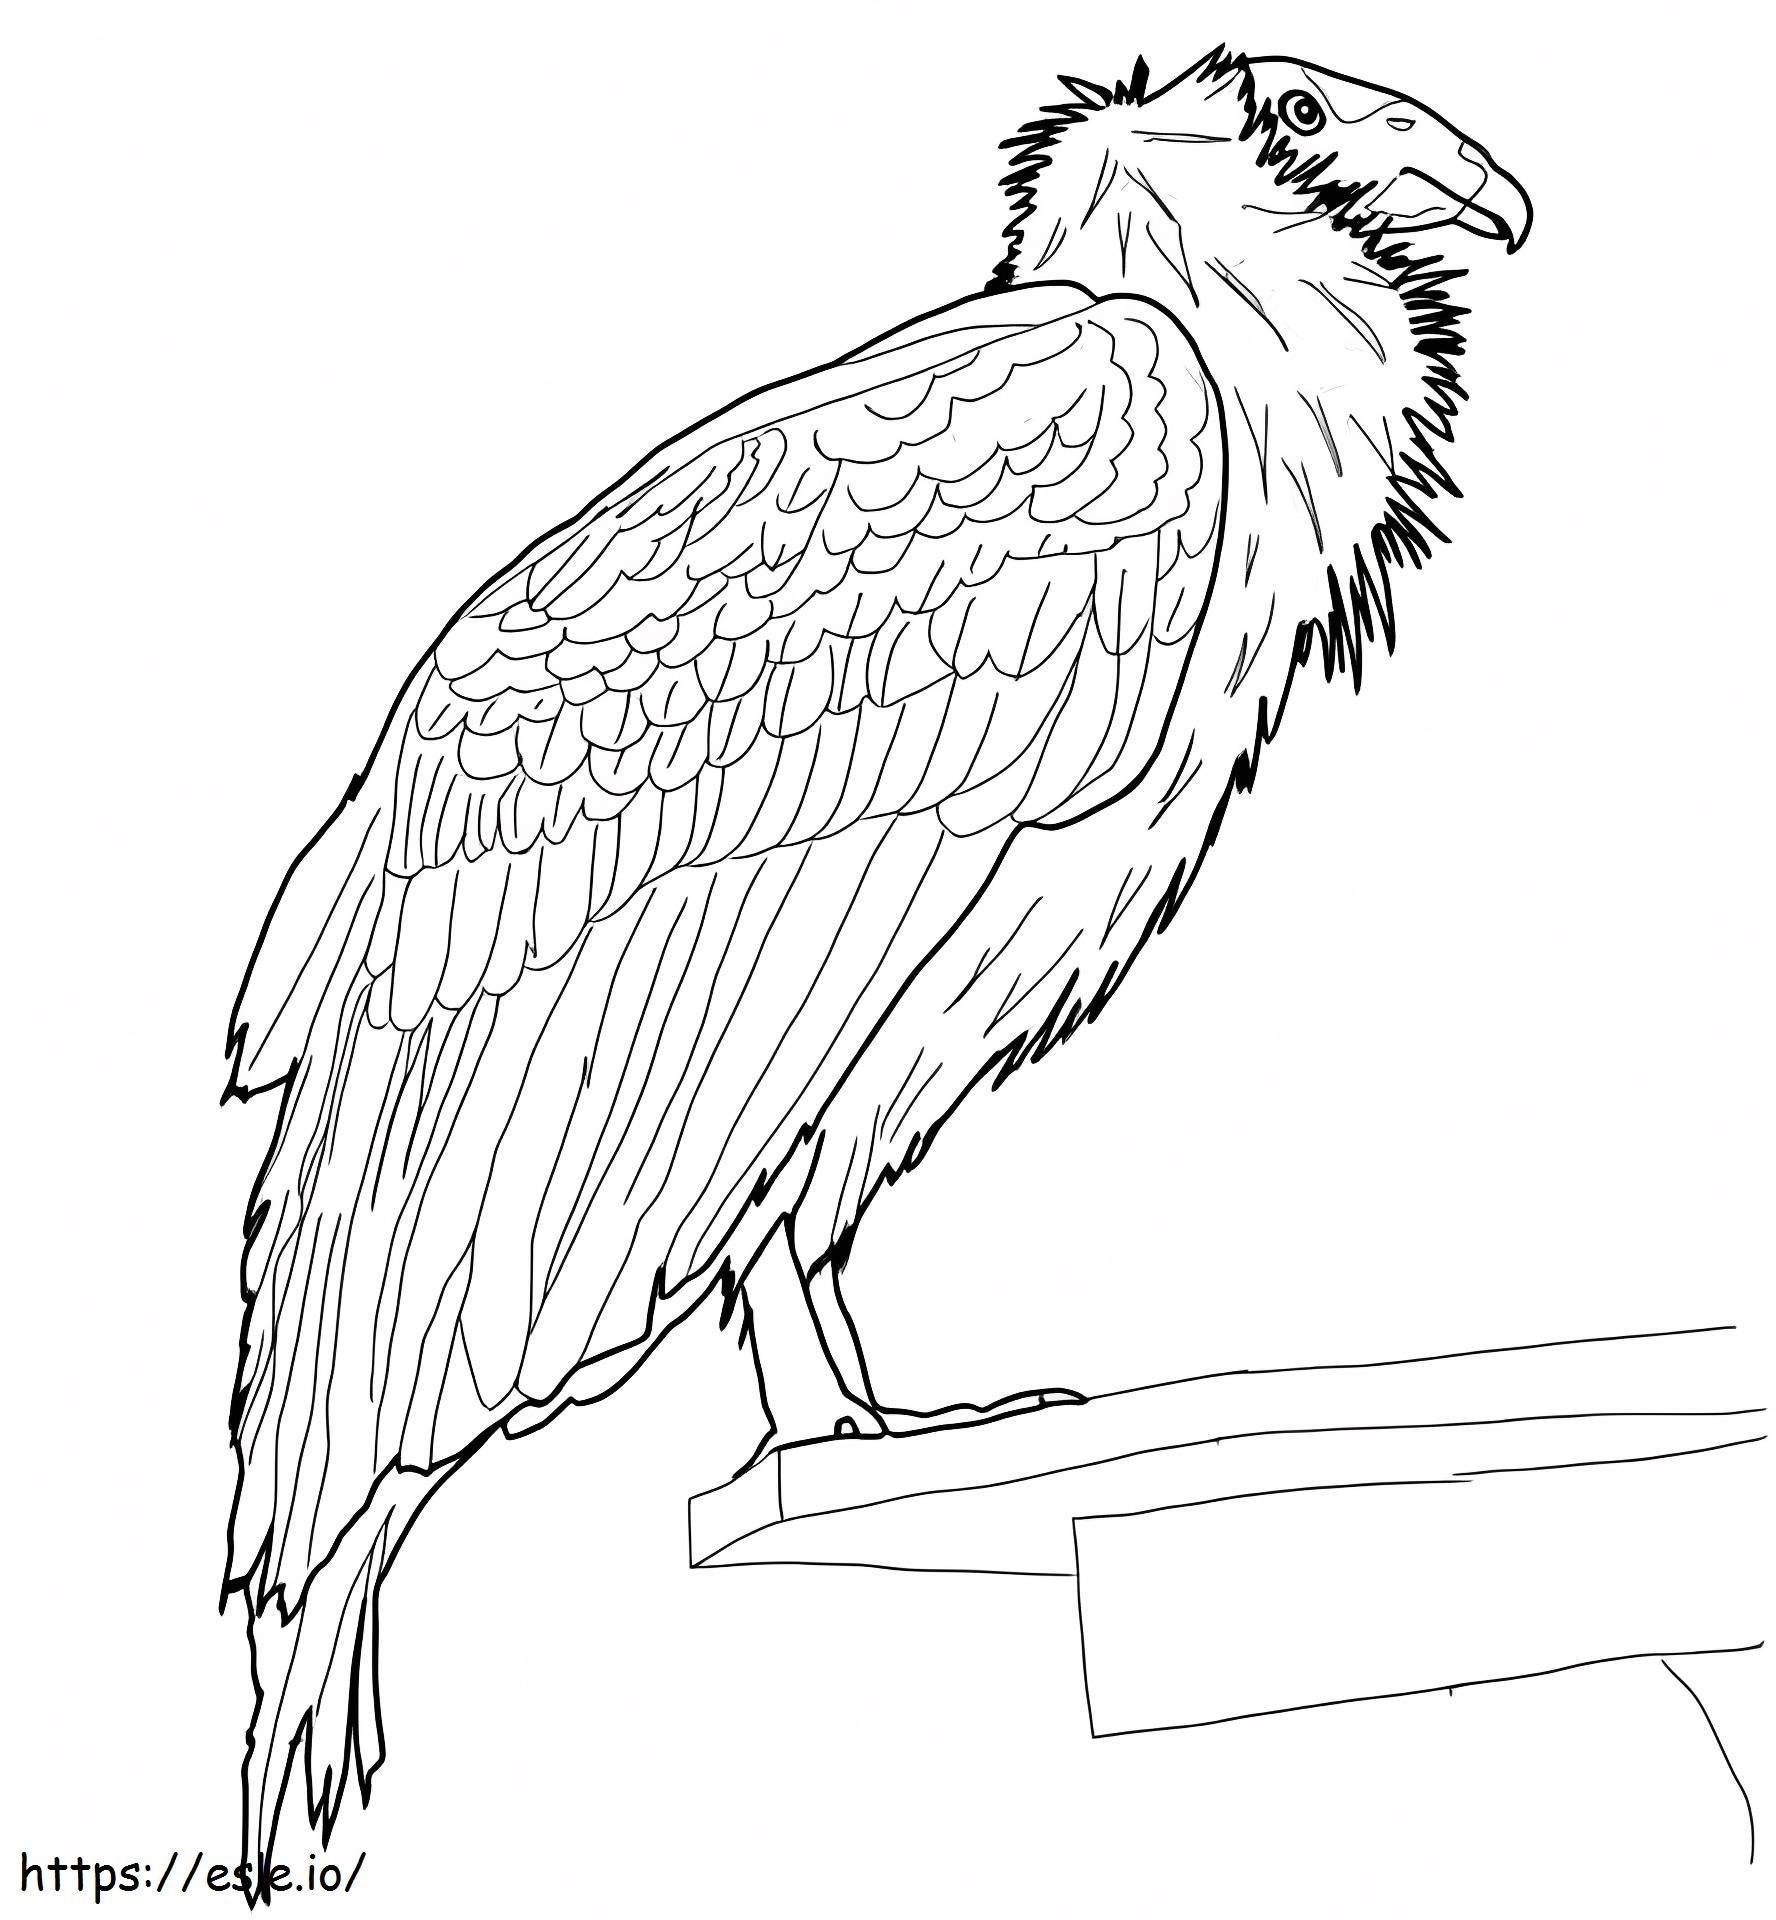 Condor da Califórnia empoleirado para colorir